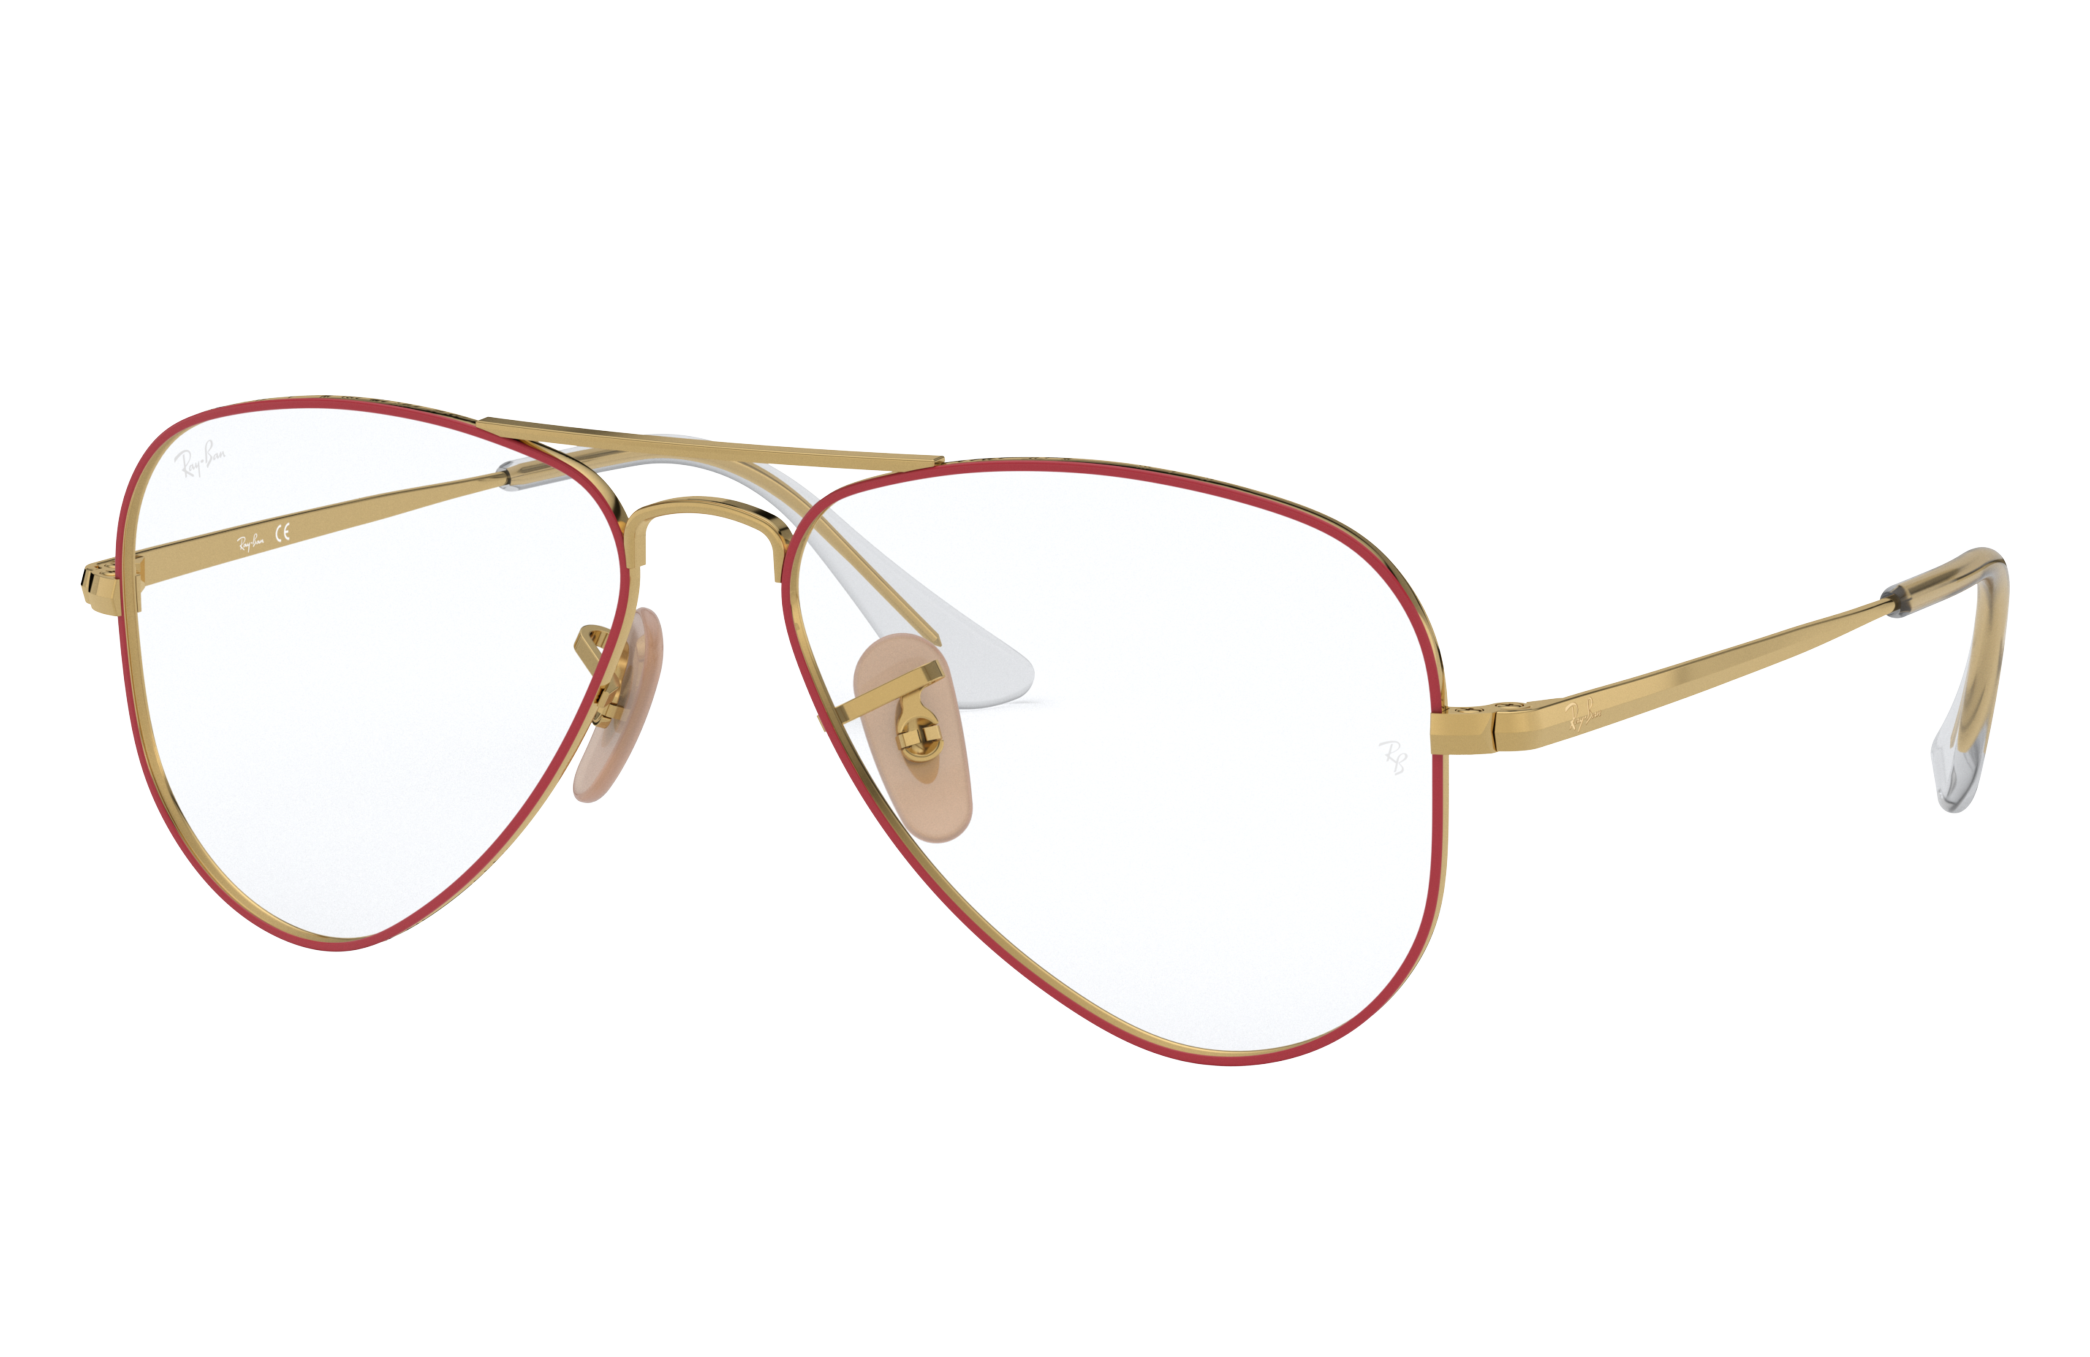 ray ban red frame aviator sunglasses